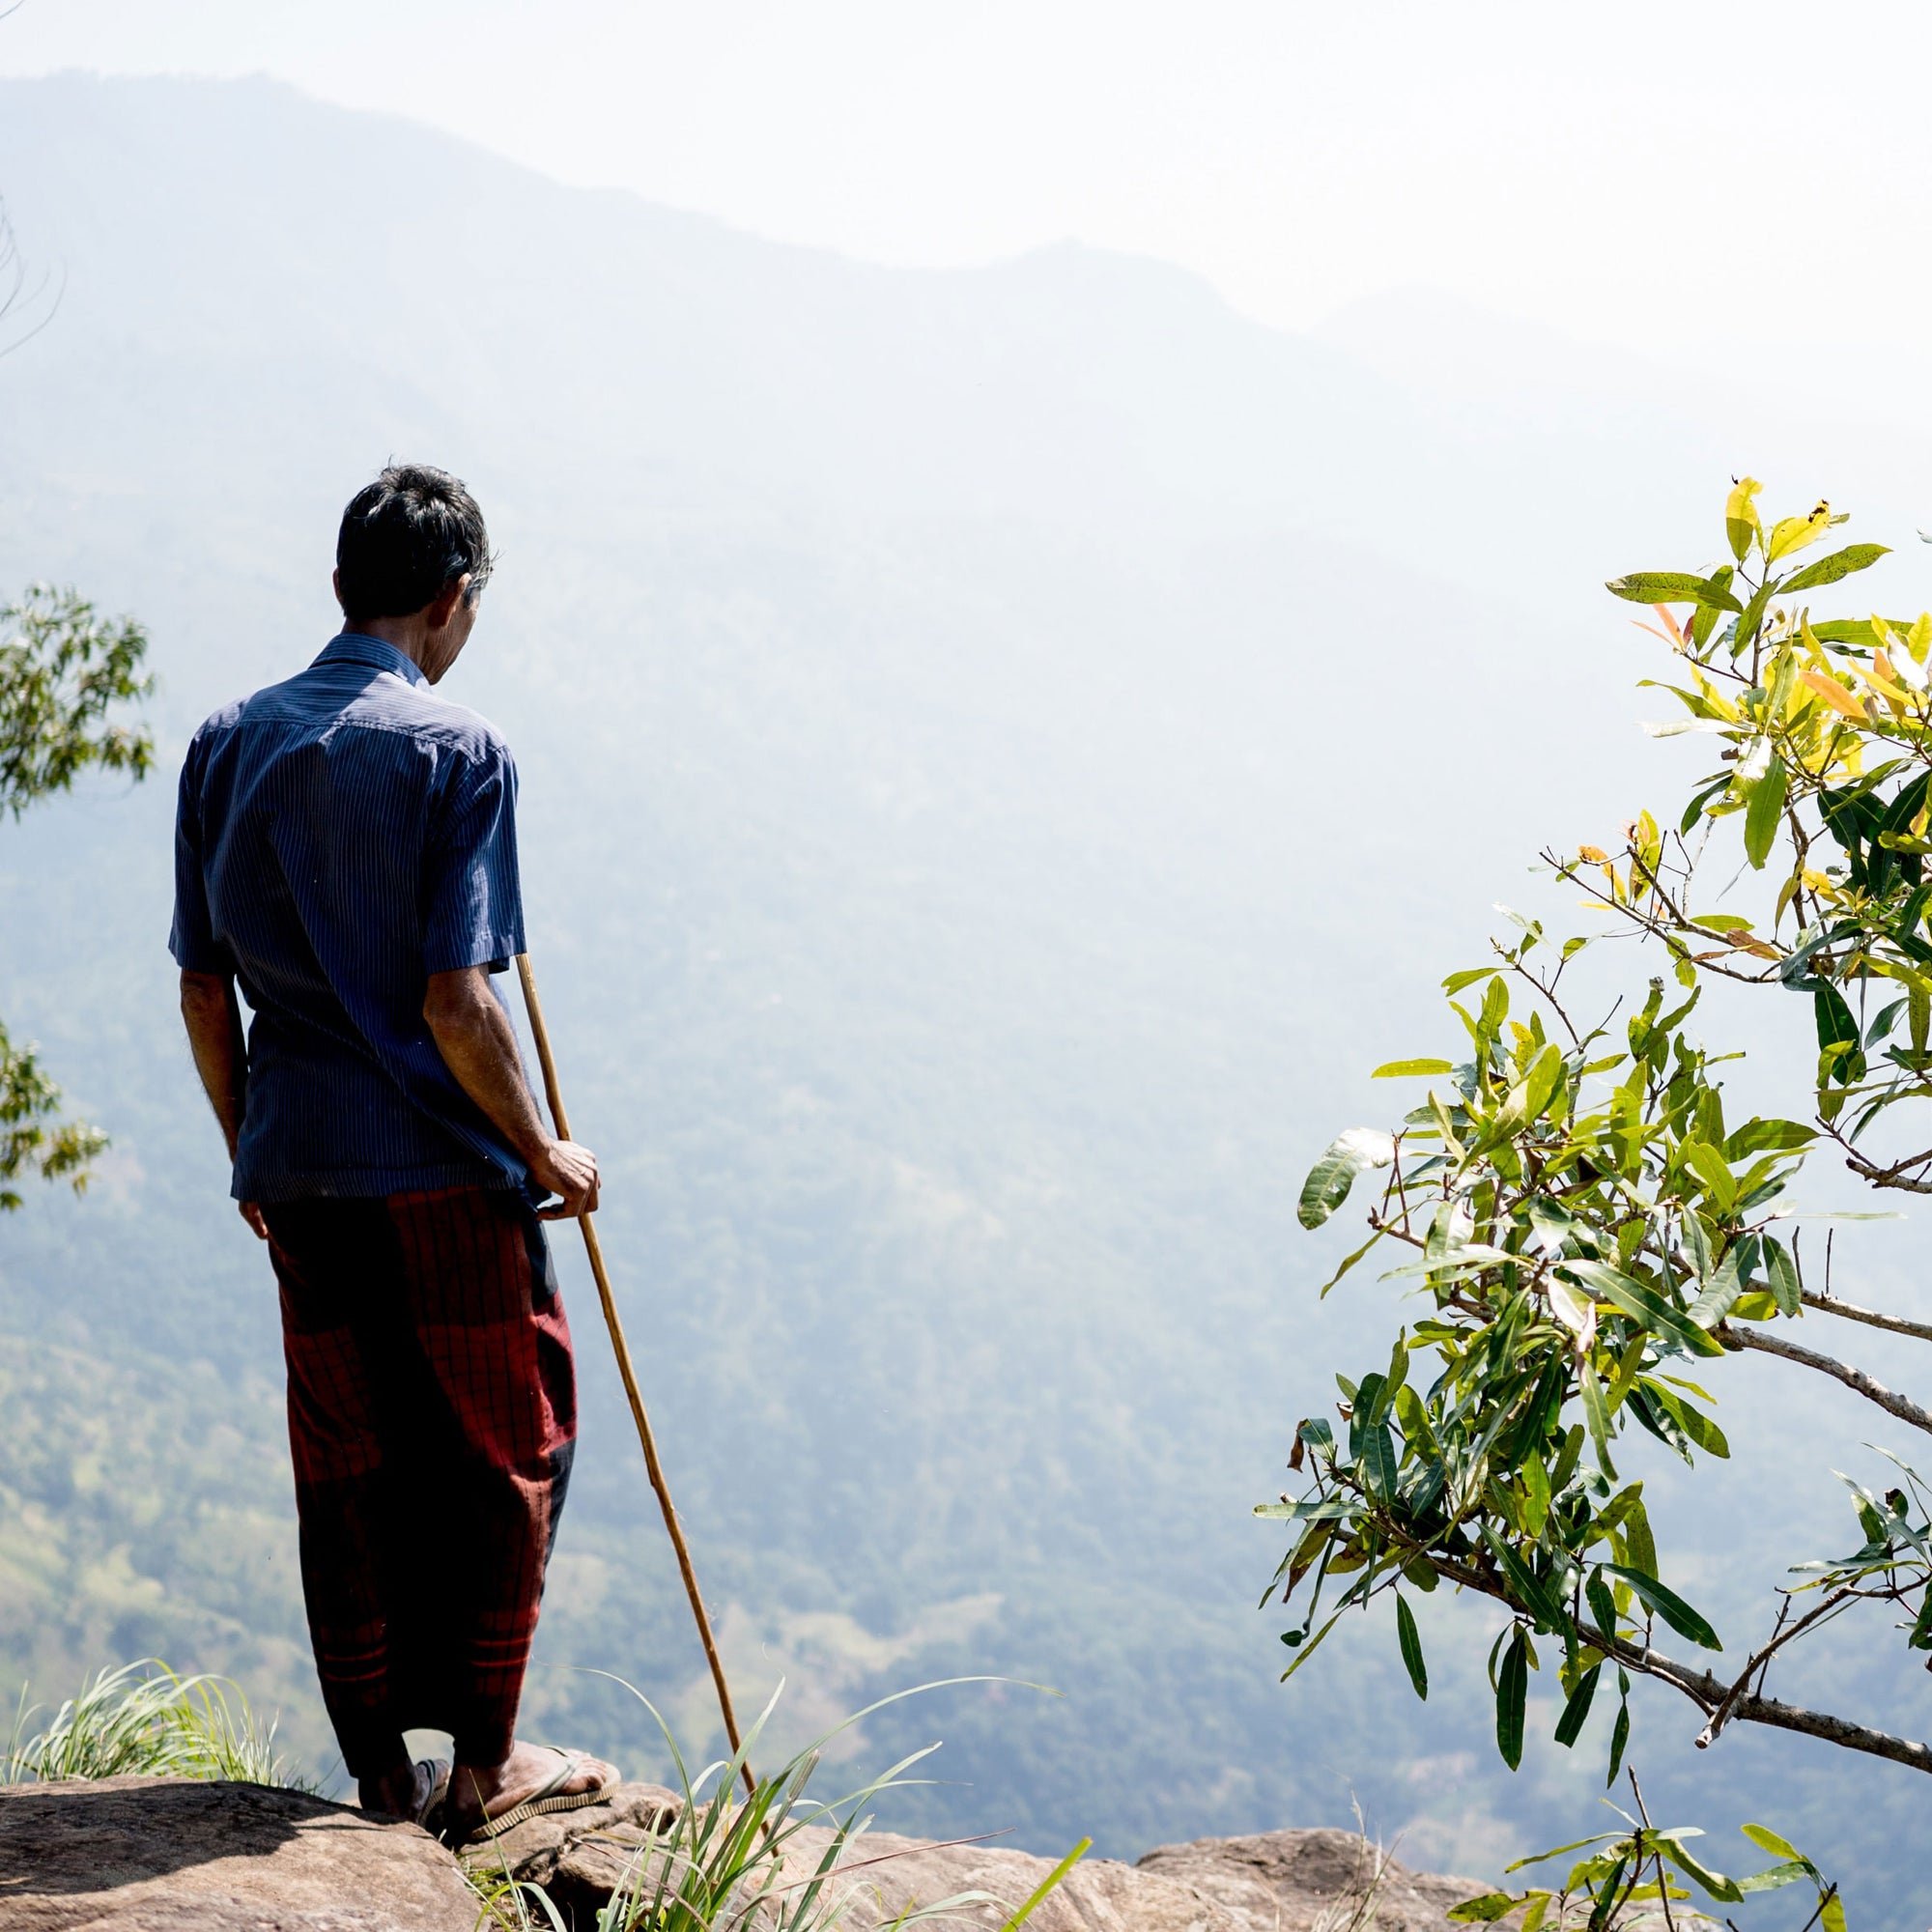 Hiking to the summit of Ella Rock in Sri Lanka's tea country